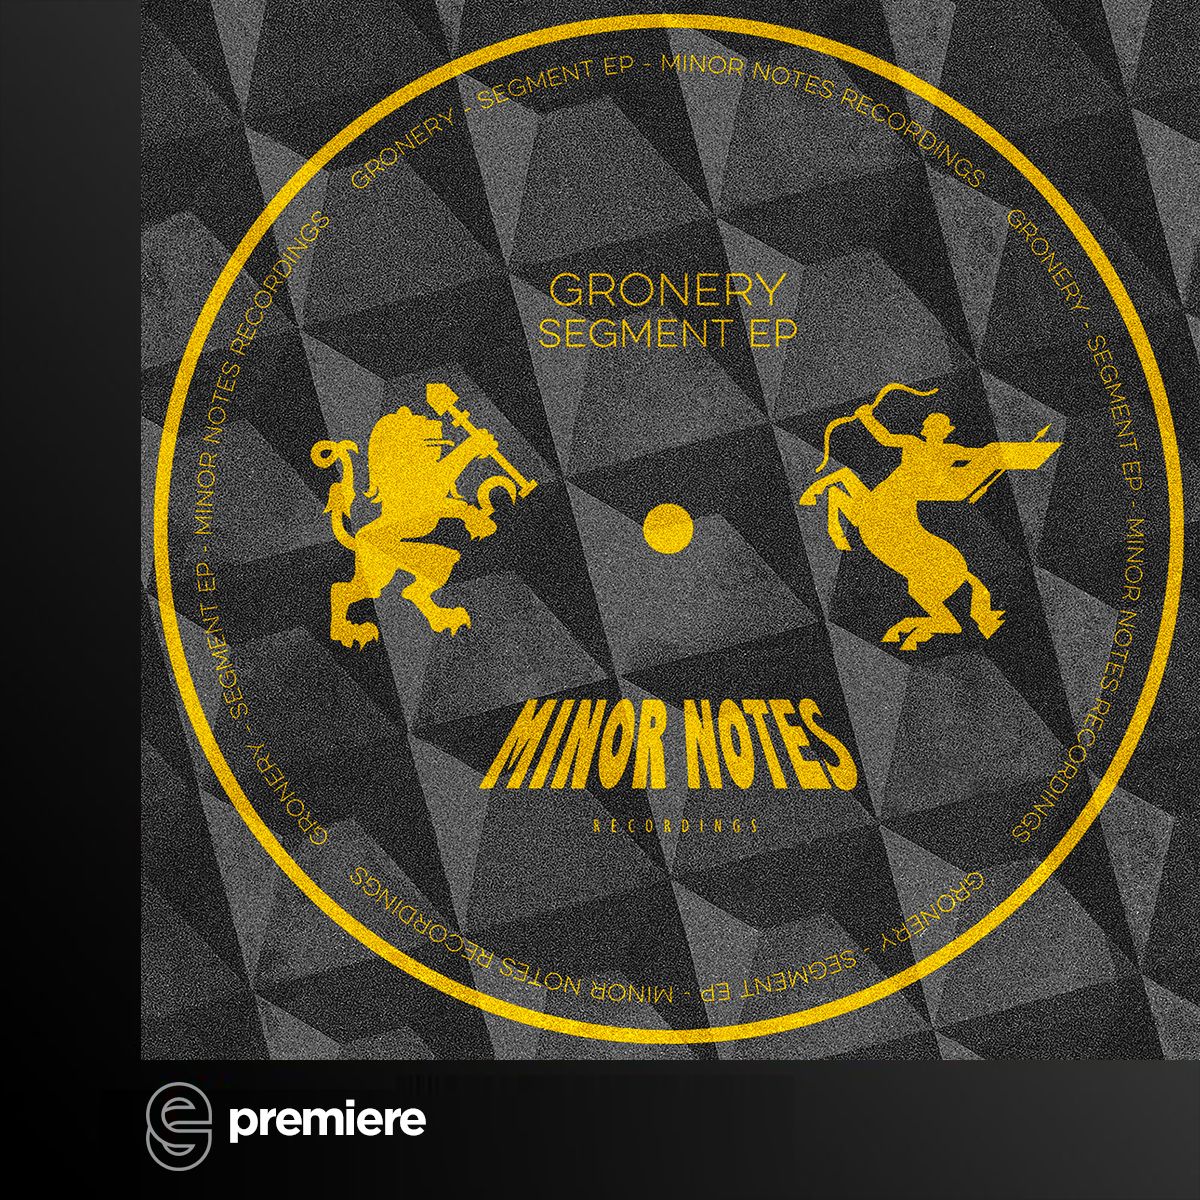 डाउनलोड करा Premiere: Gronery - Bouncing On Ya - Minor Notes Recordings